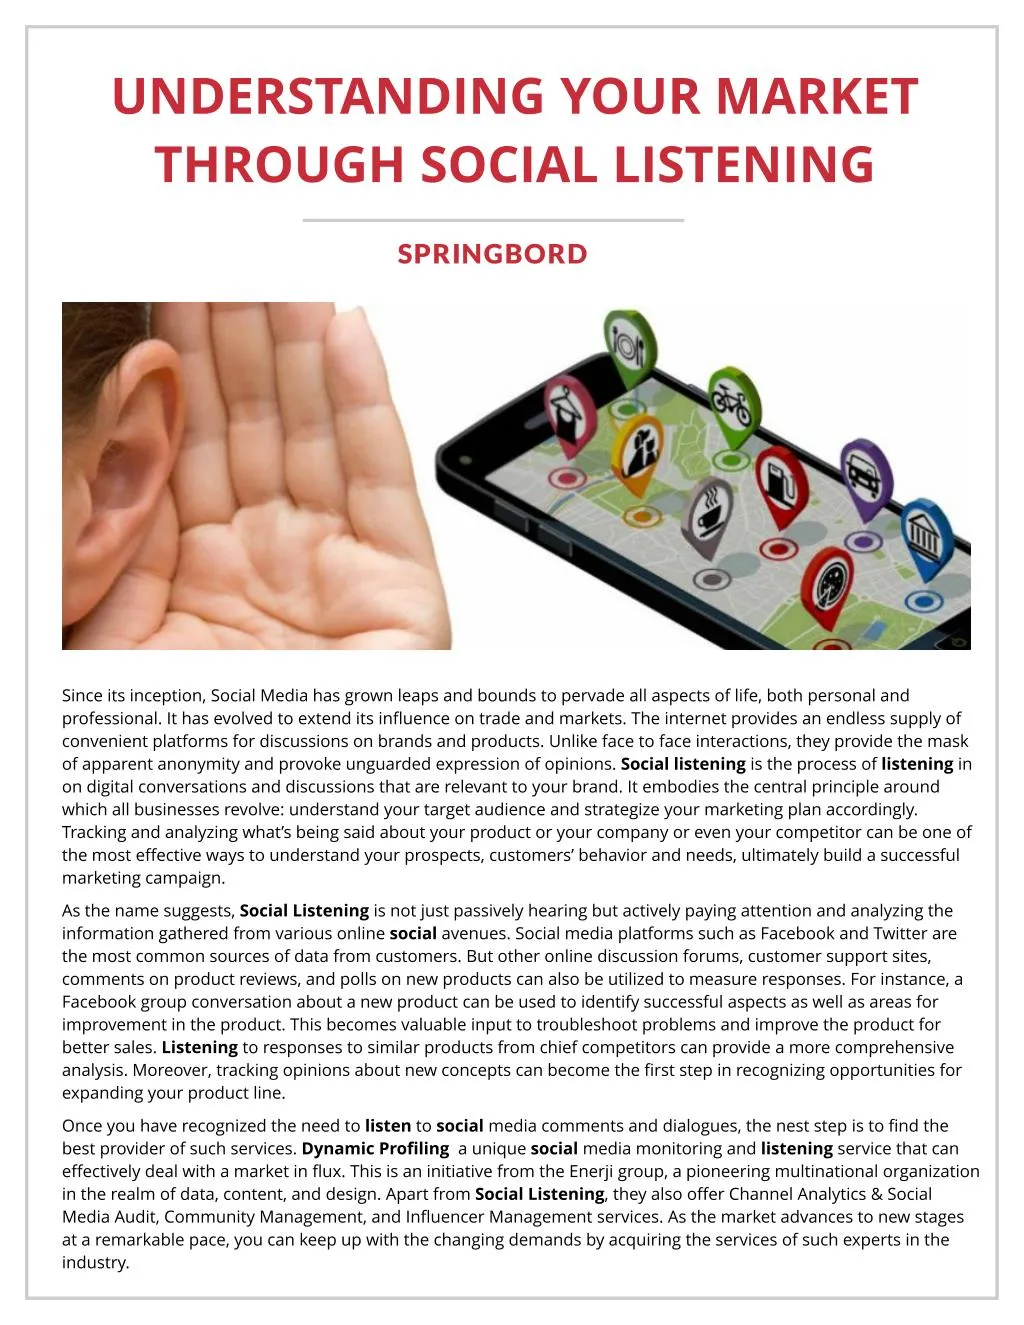 understanding your market through social listening